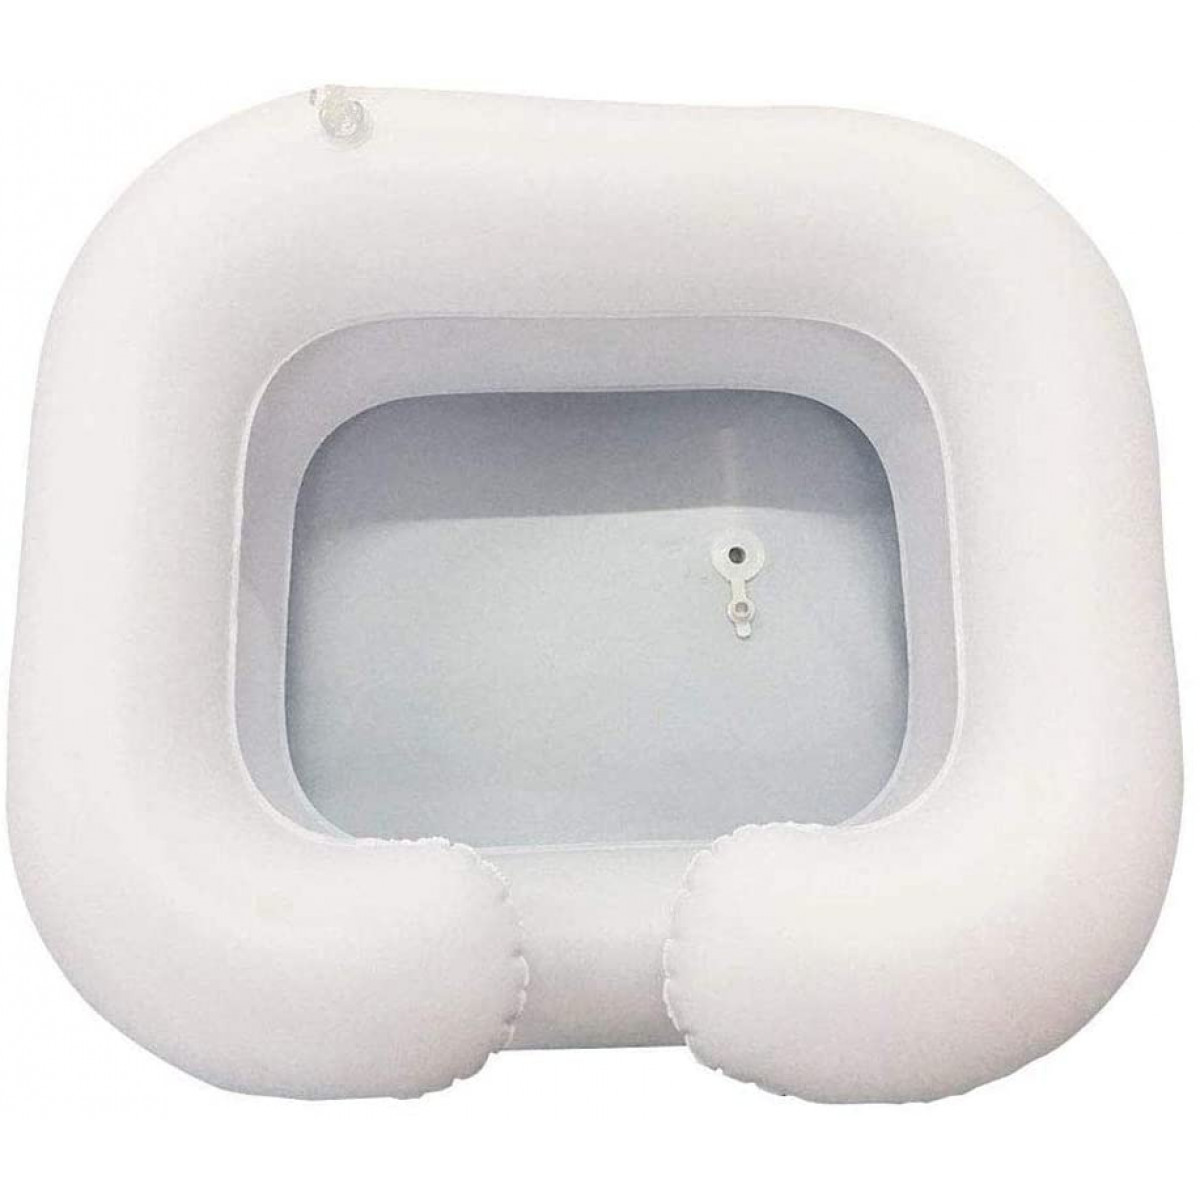 Inflatable Hair Washing Basin Shampoo Basin,Portable